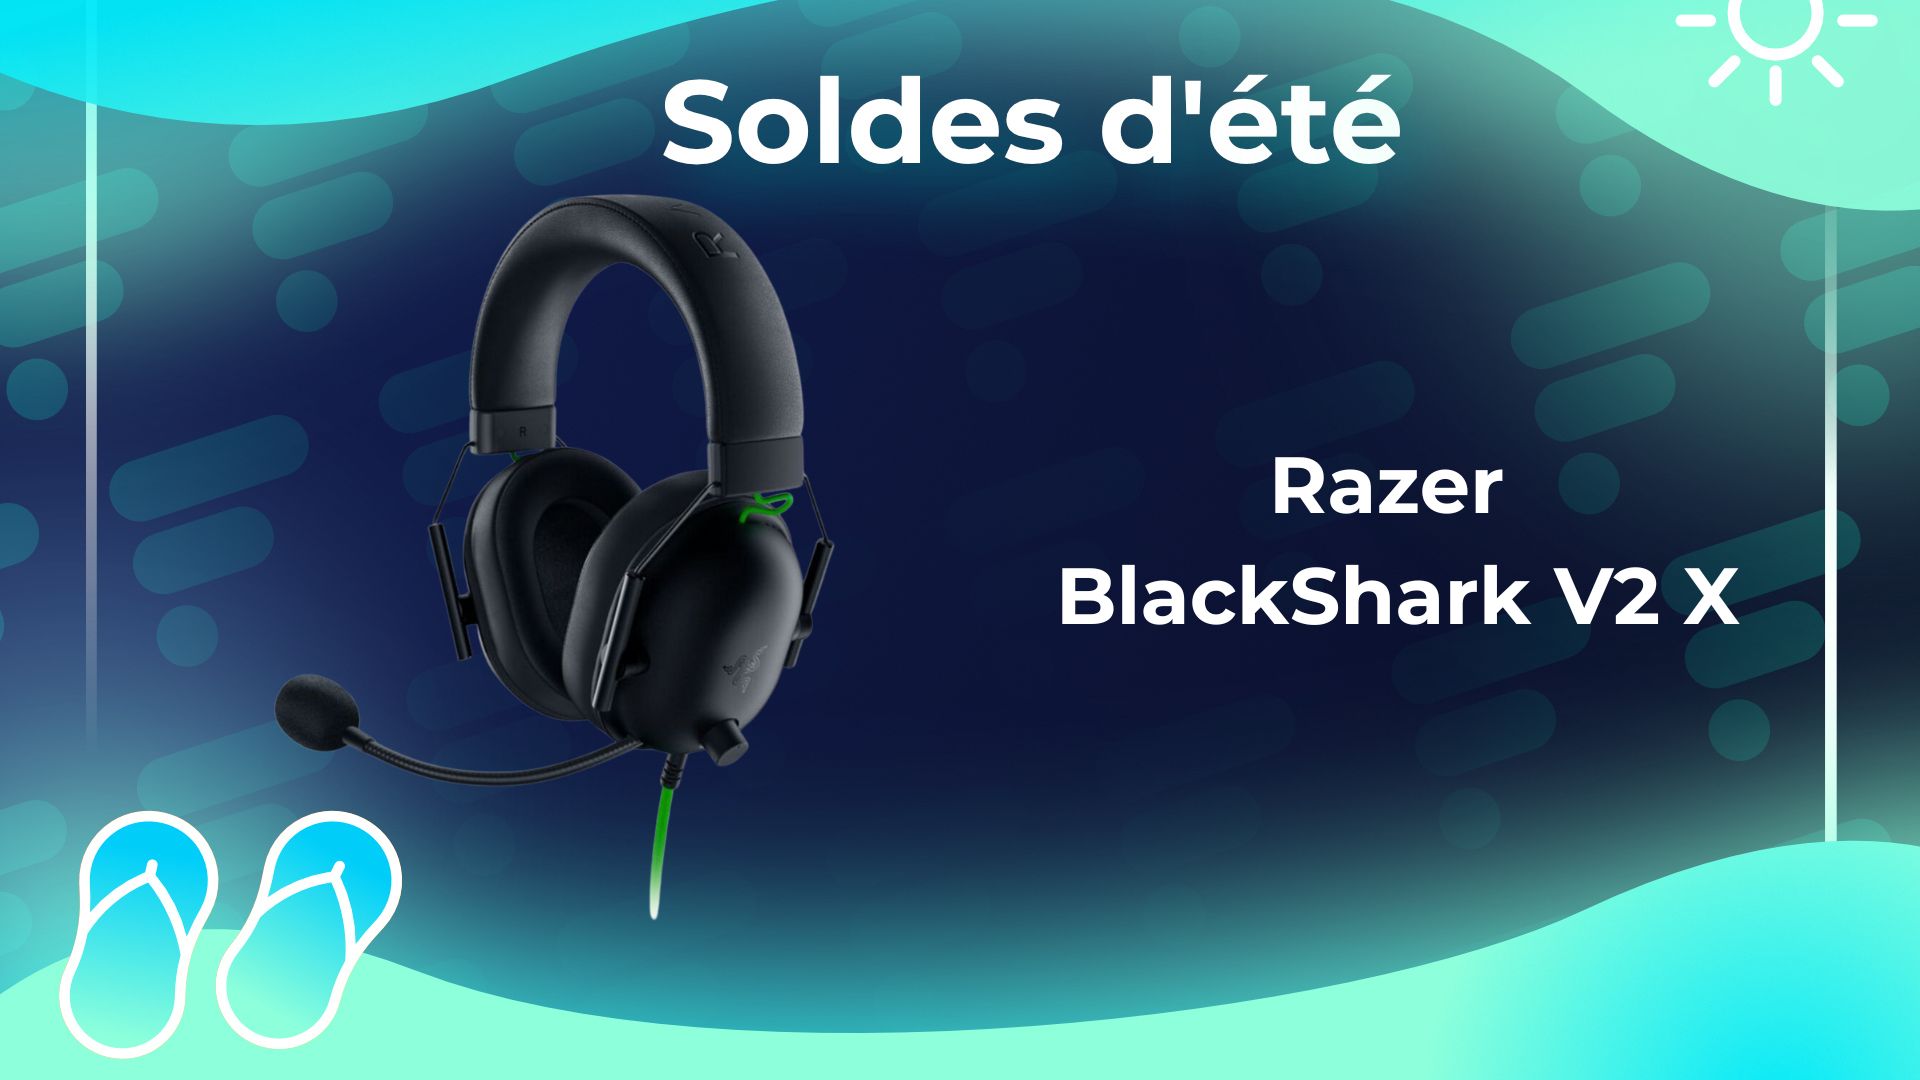 Razer BlackShark V2 X : seulement 40 € pour ce casque e-sport avec